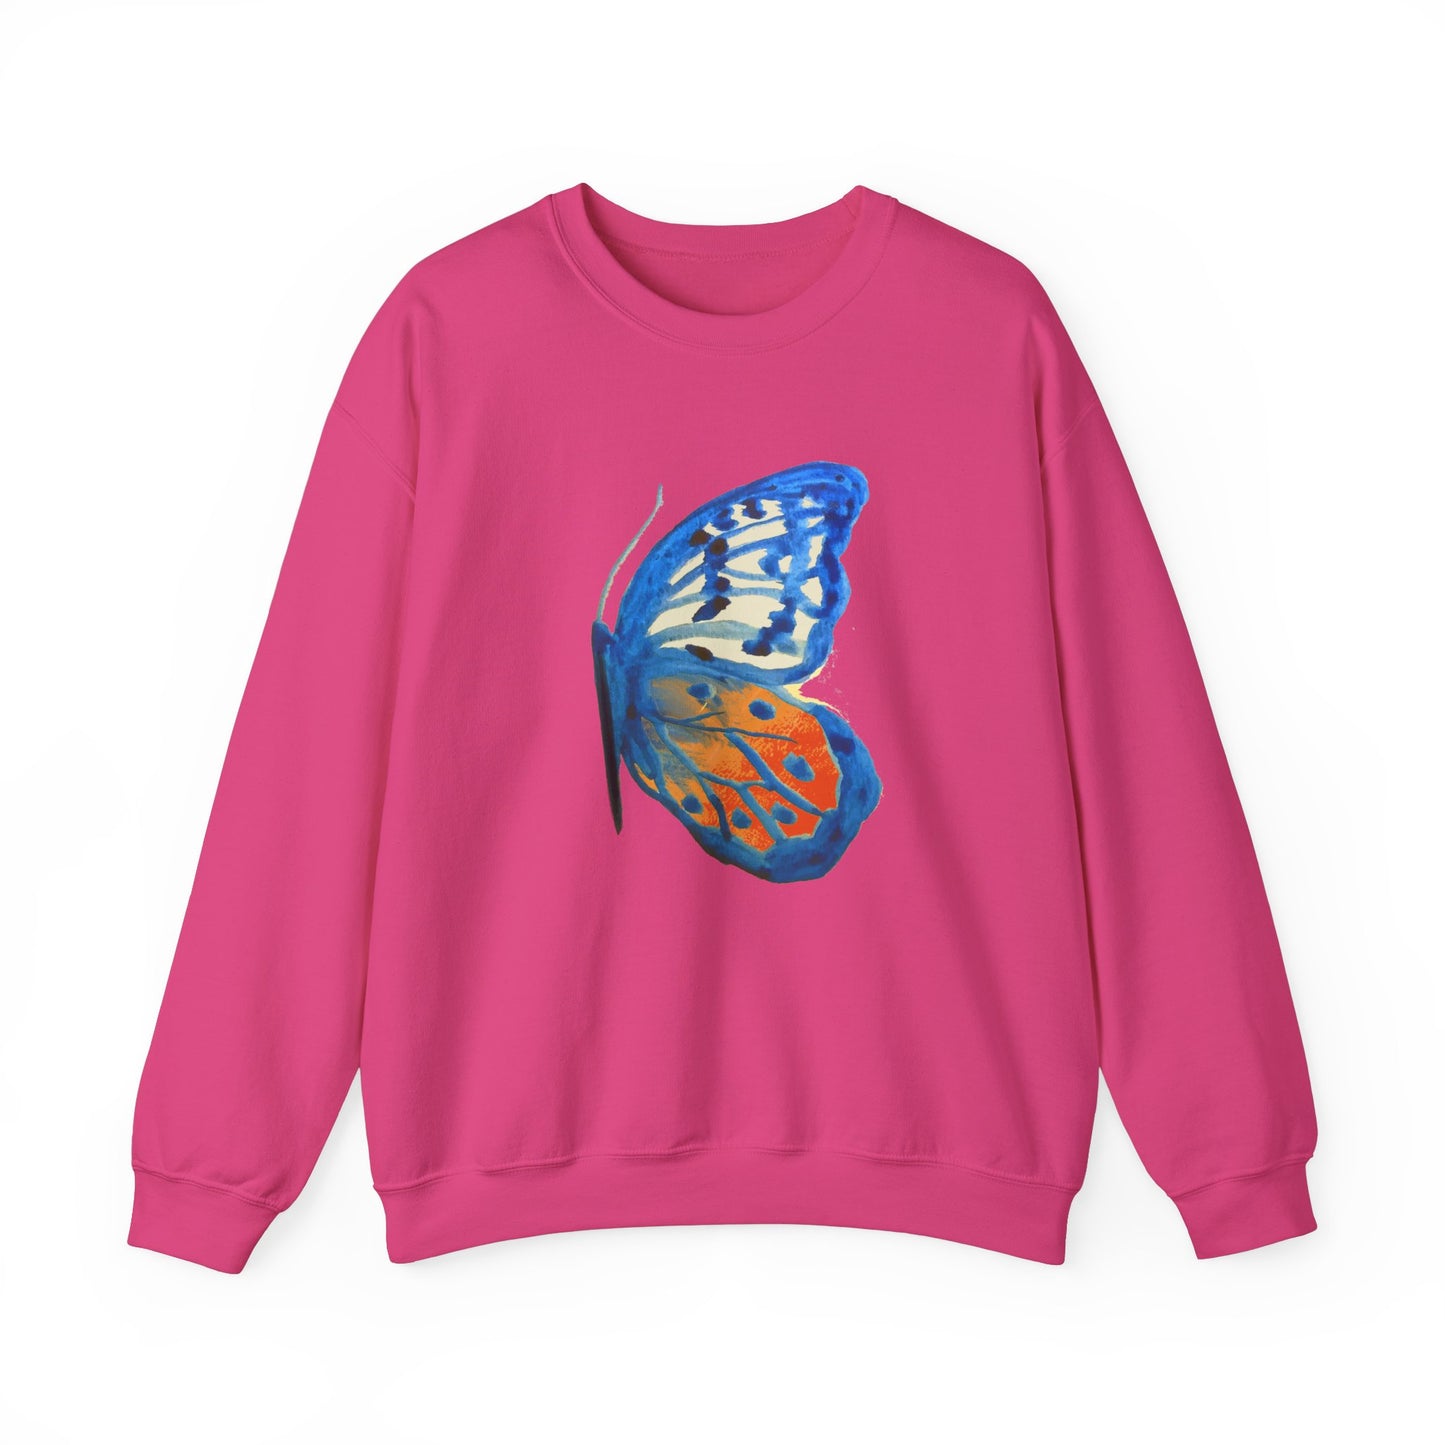 Blue and Orange butterfly Sweatshirt